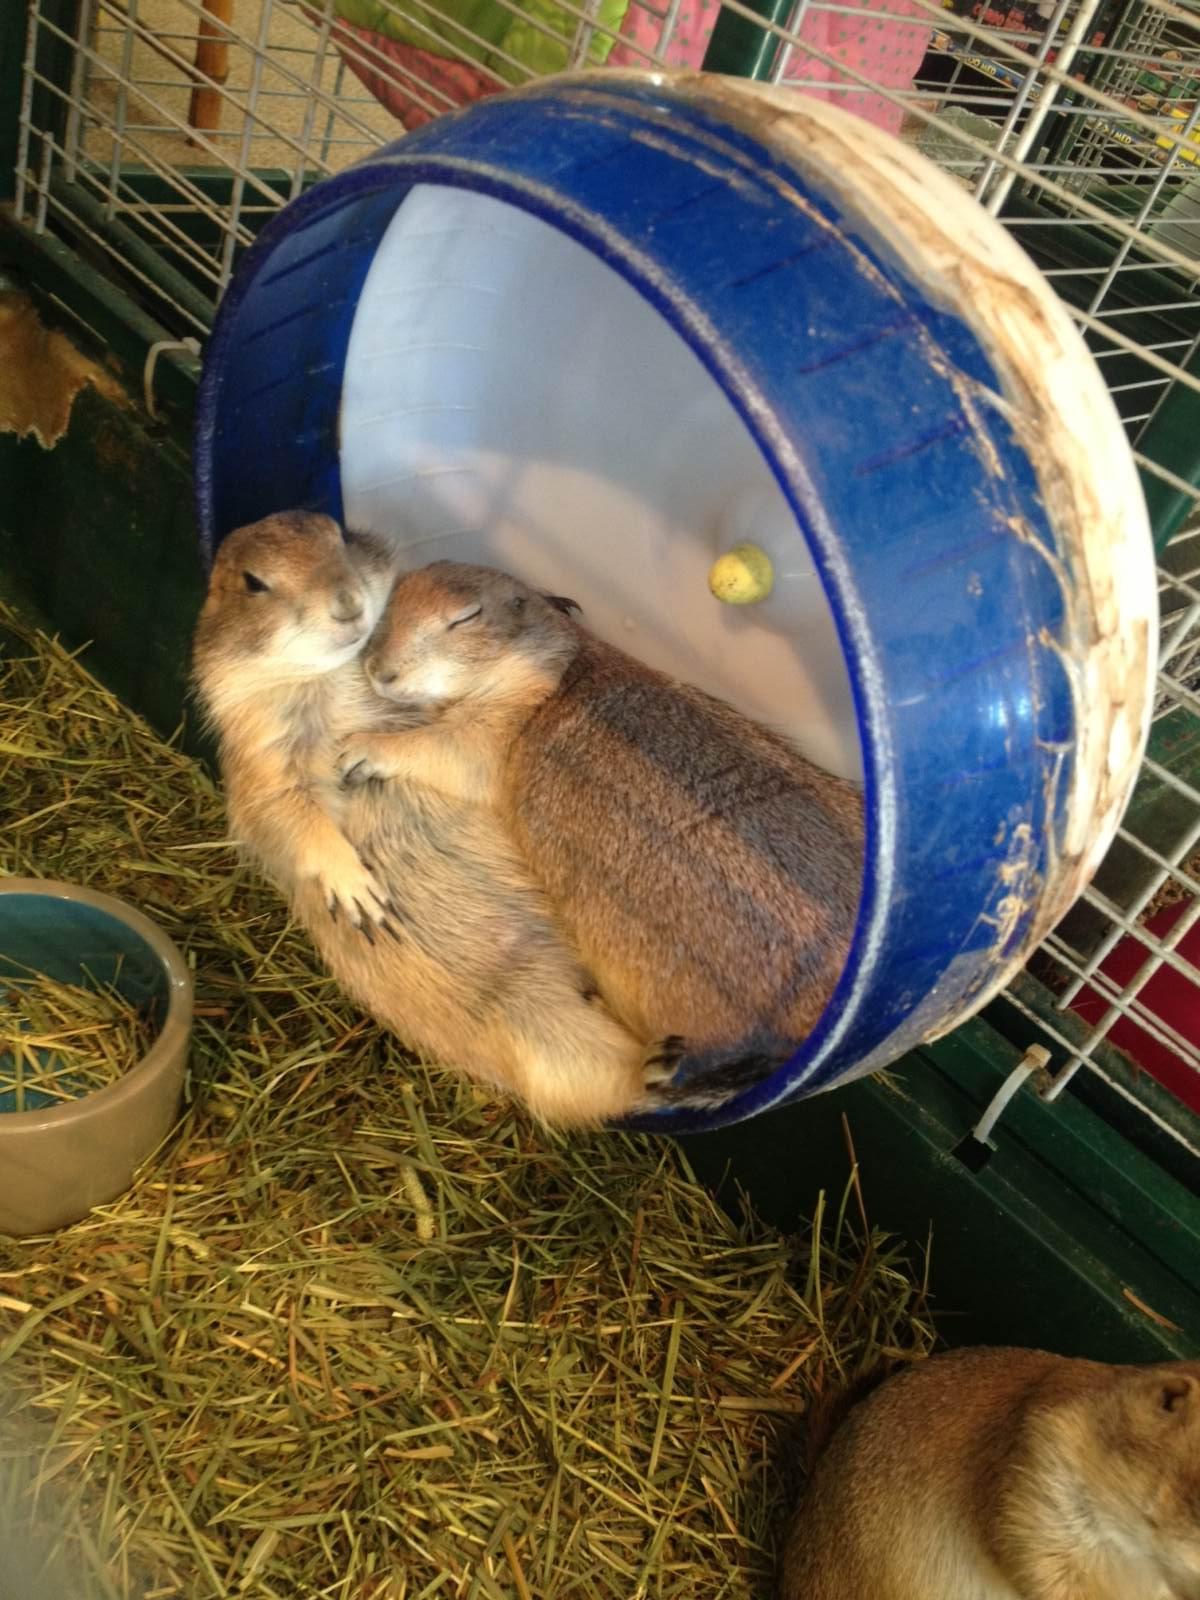 snuggle buddies